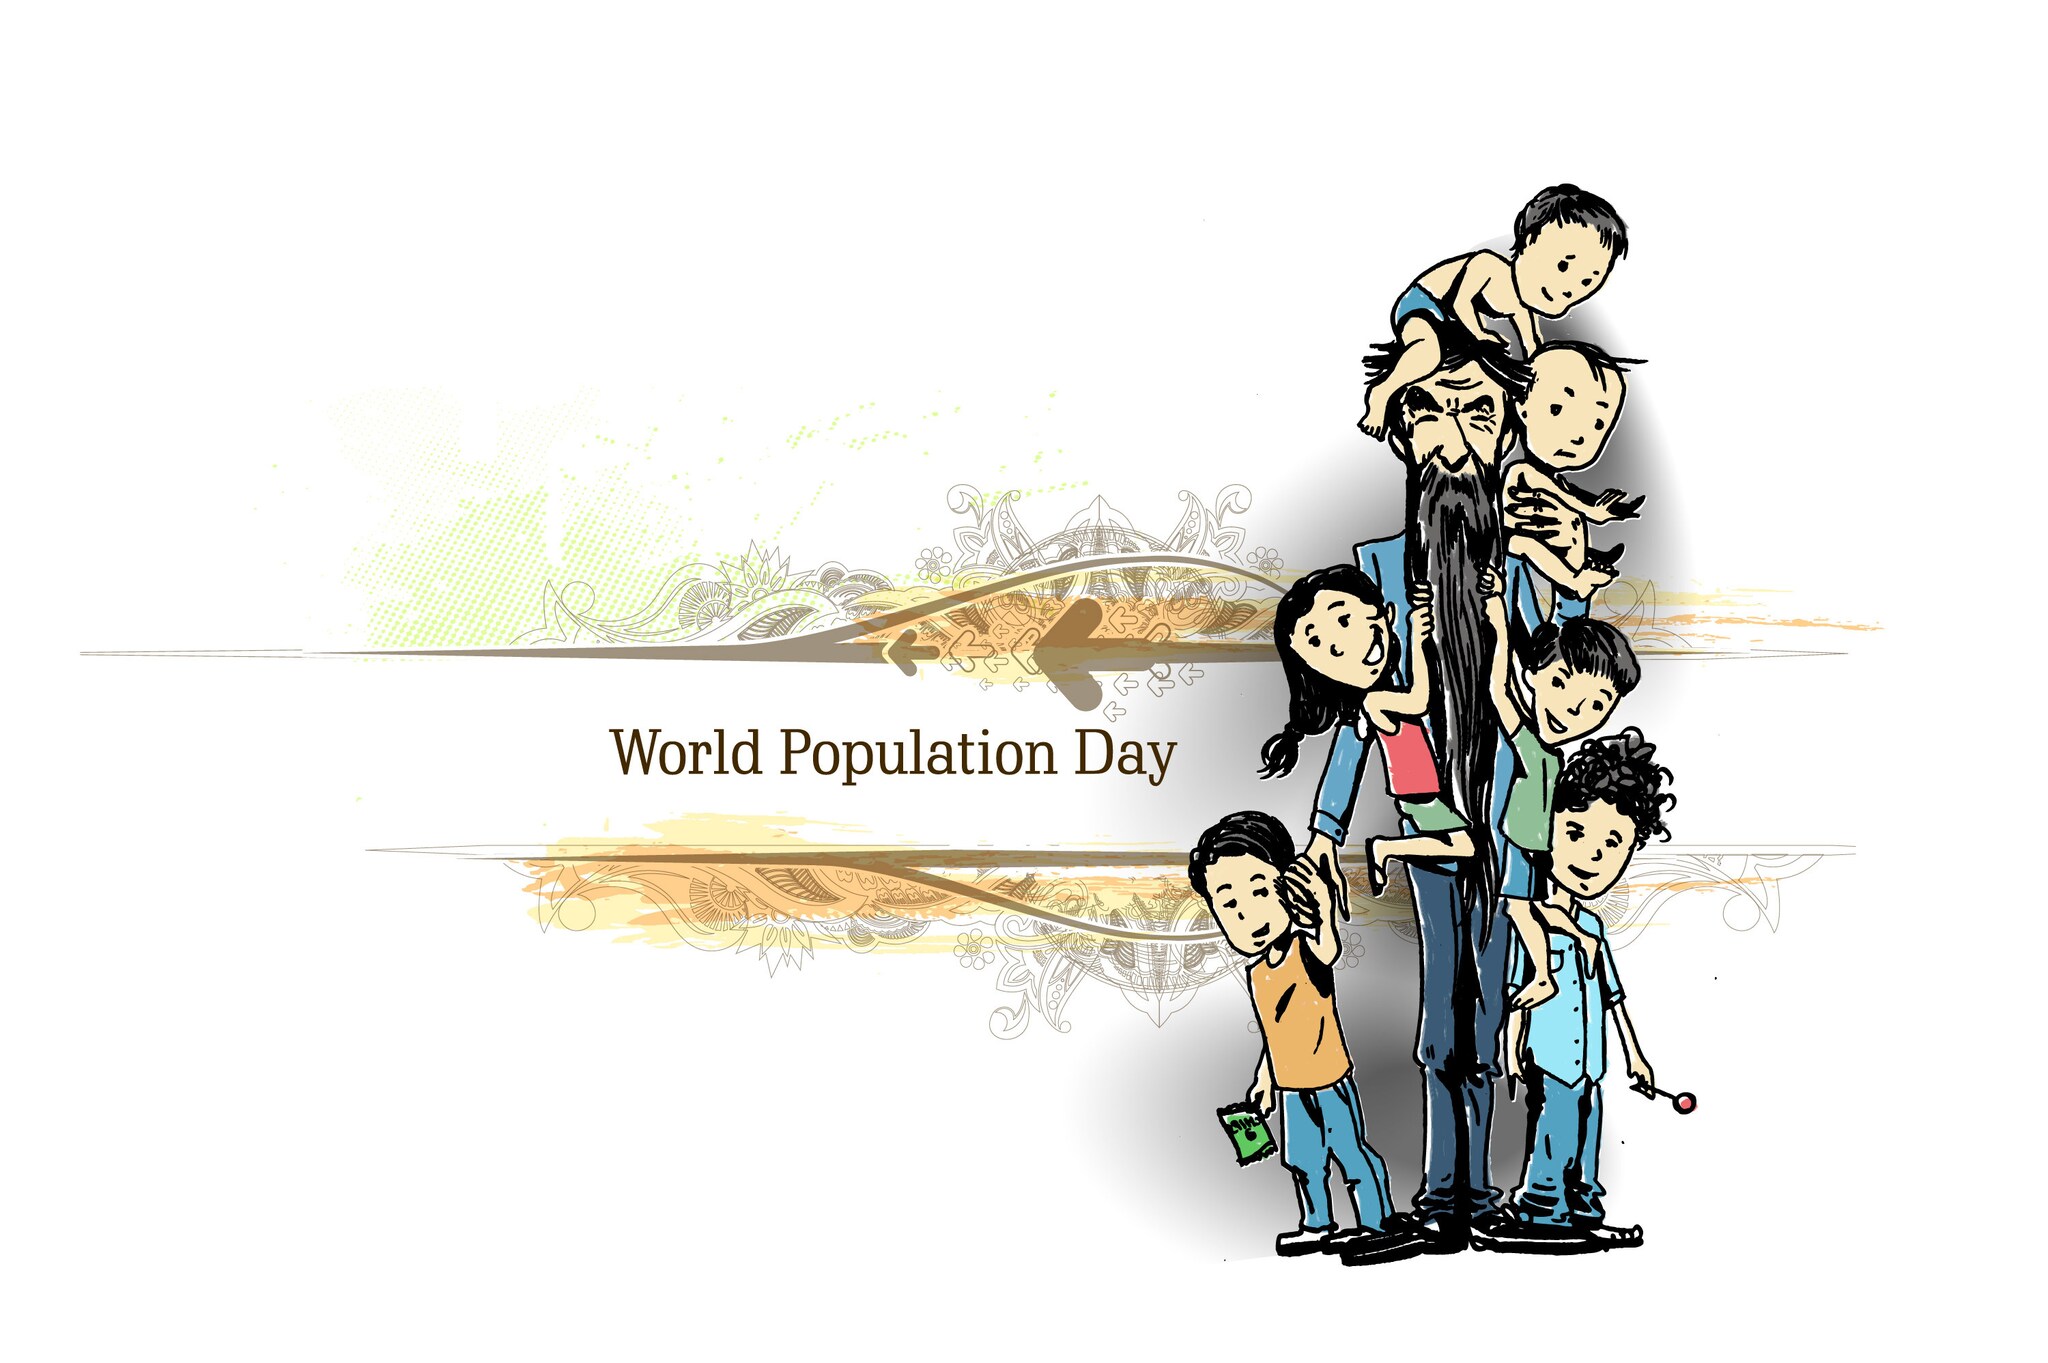 Poster Making - World Population Day | Flickr